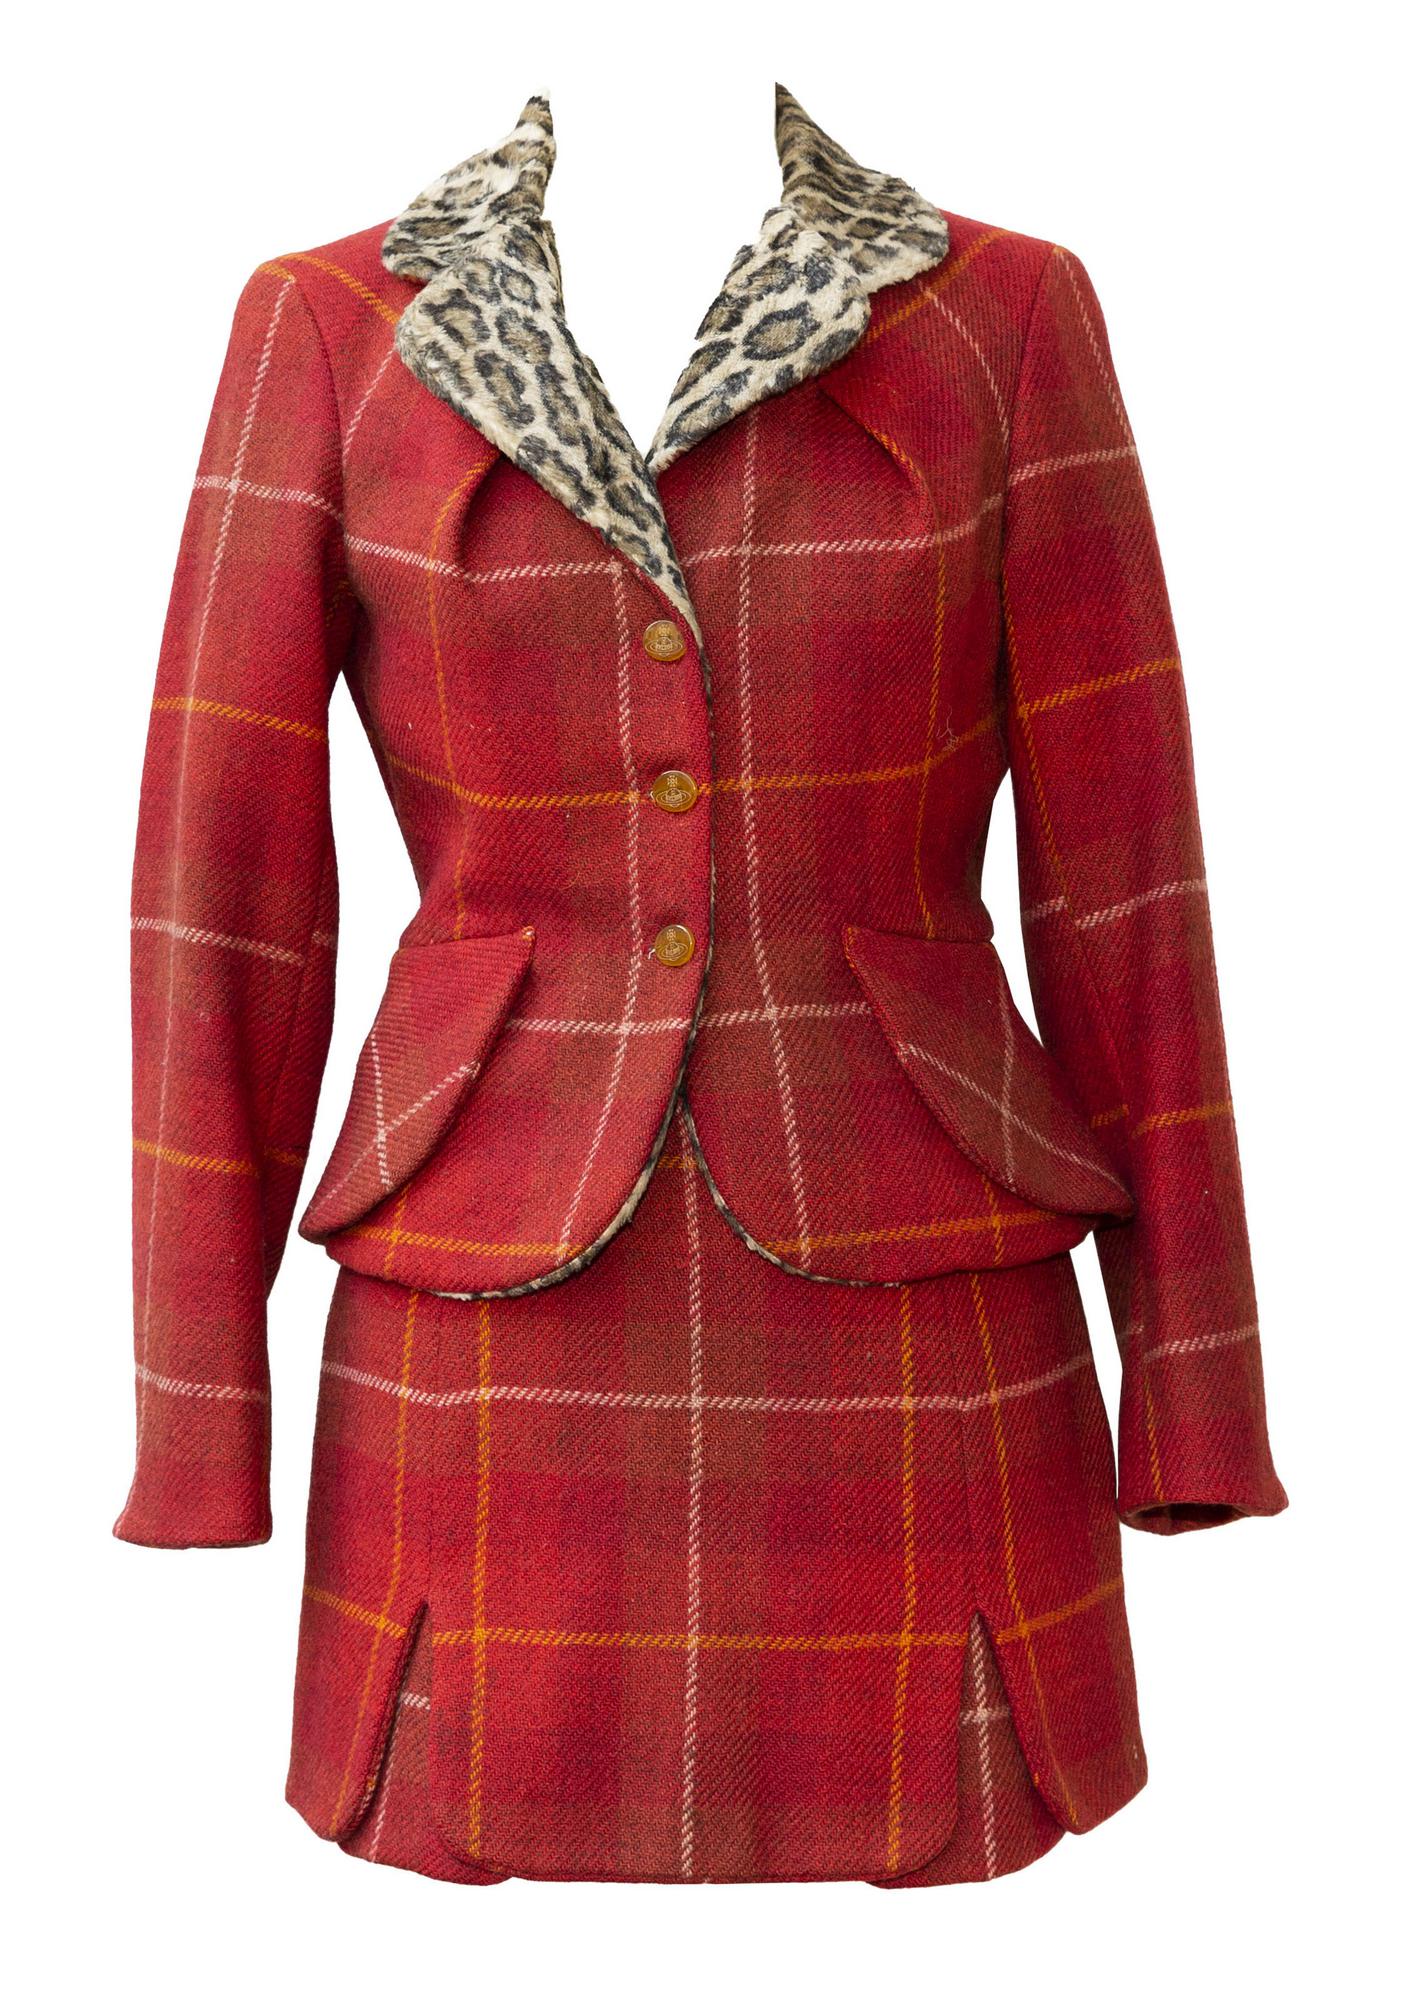 Vivienne Westwood BETTINA RED TARTAN SUIT Description: Red tartan tweed suit...